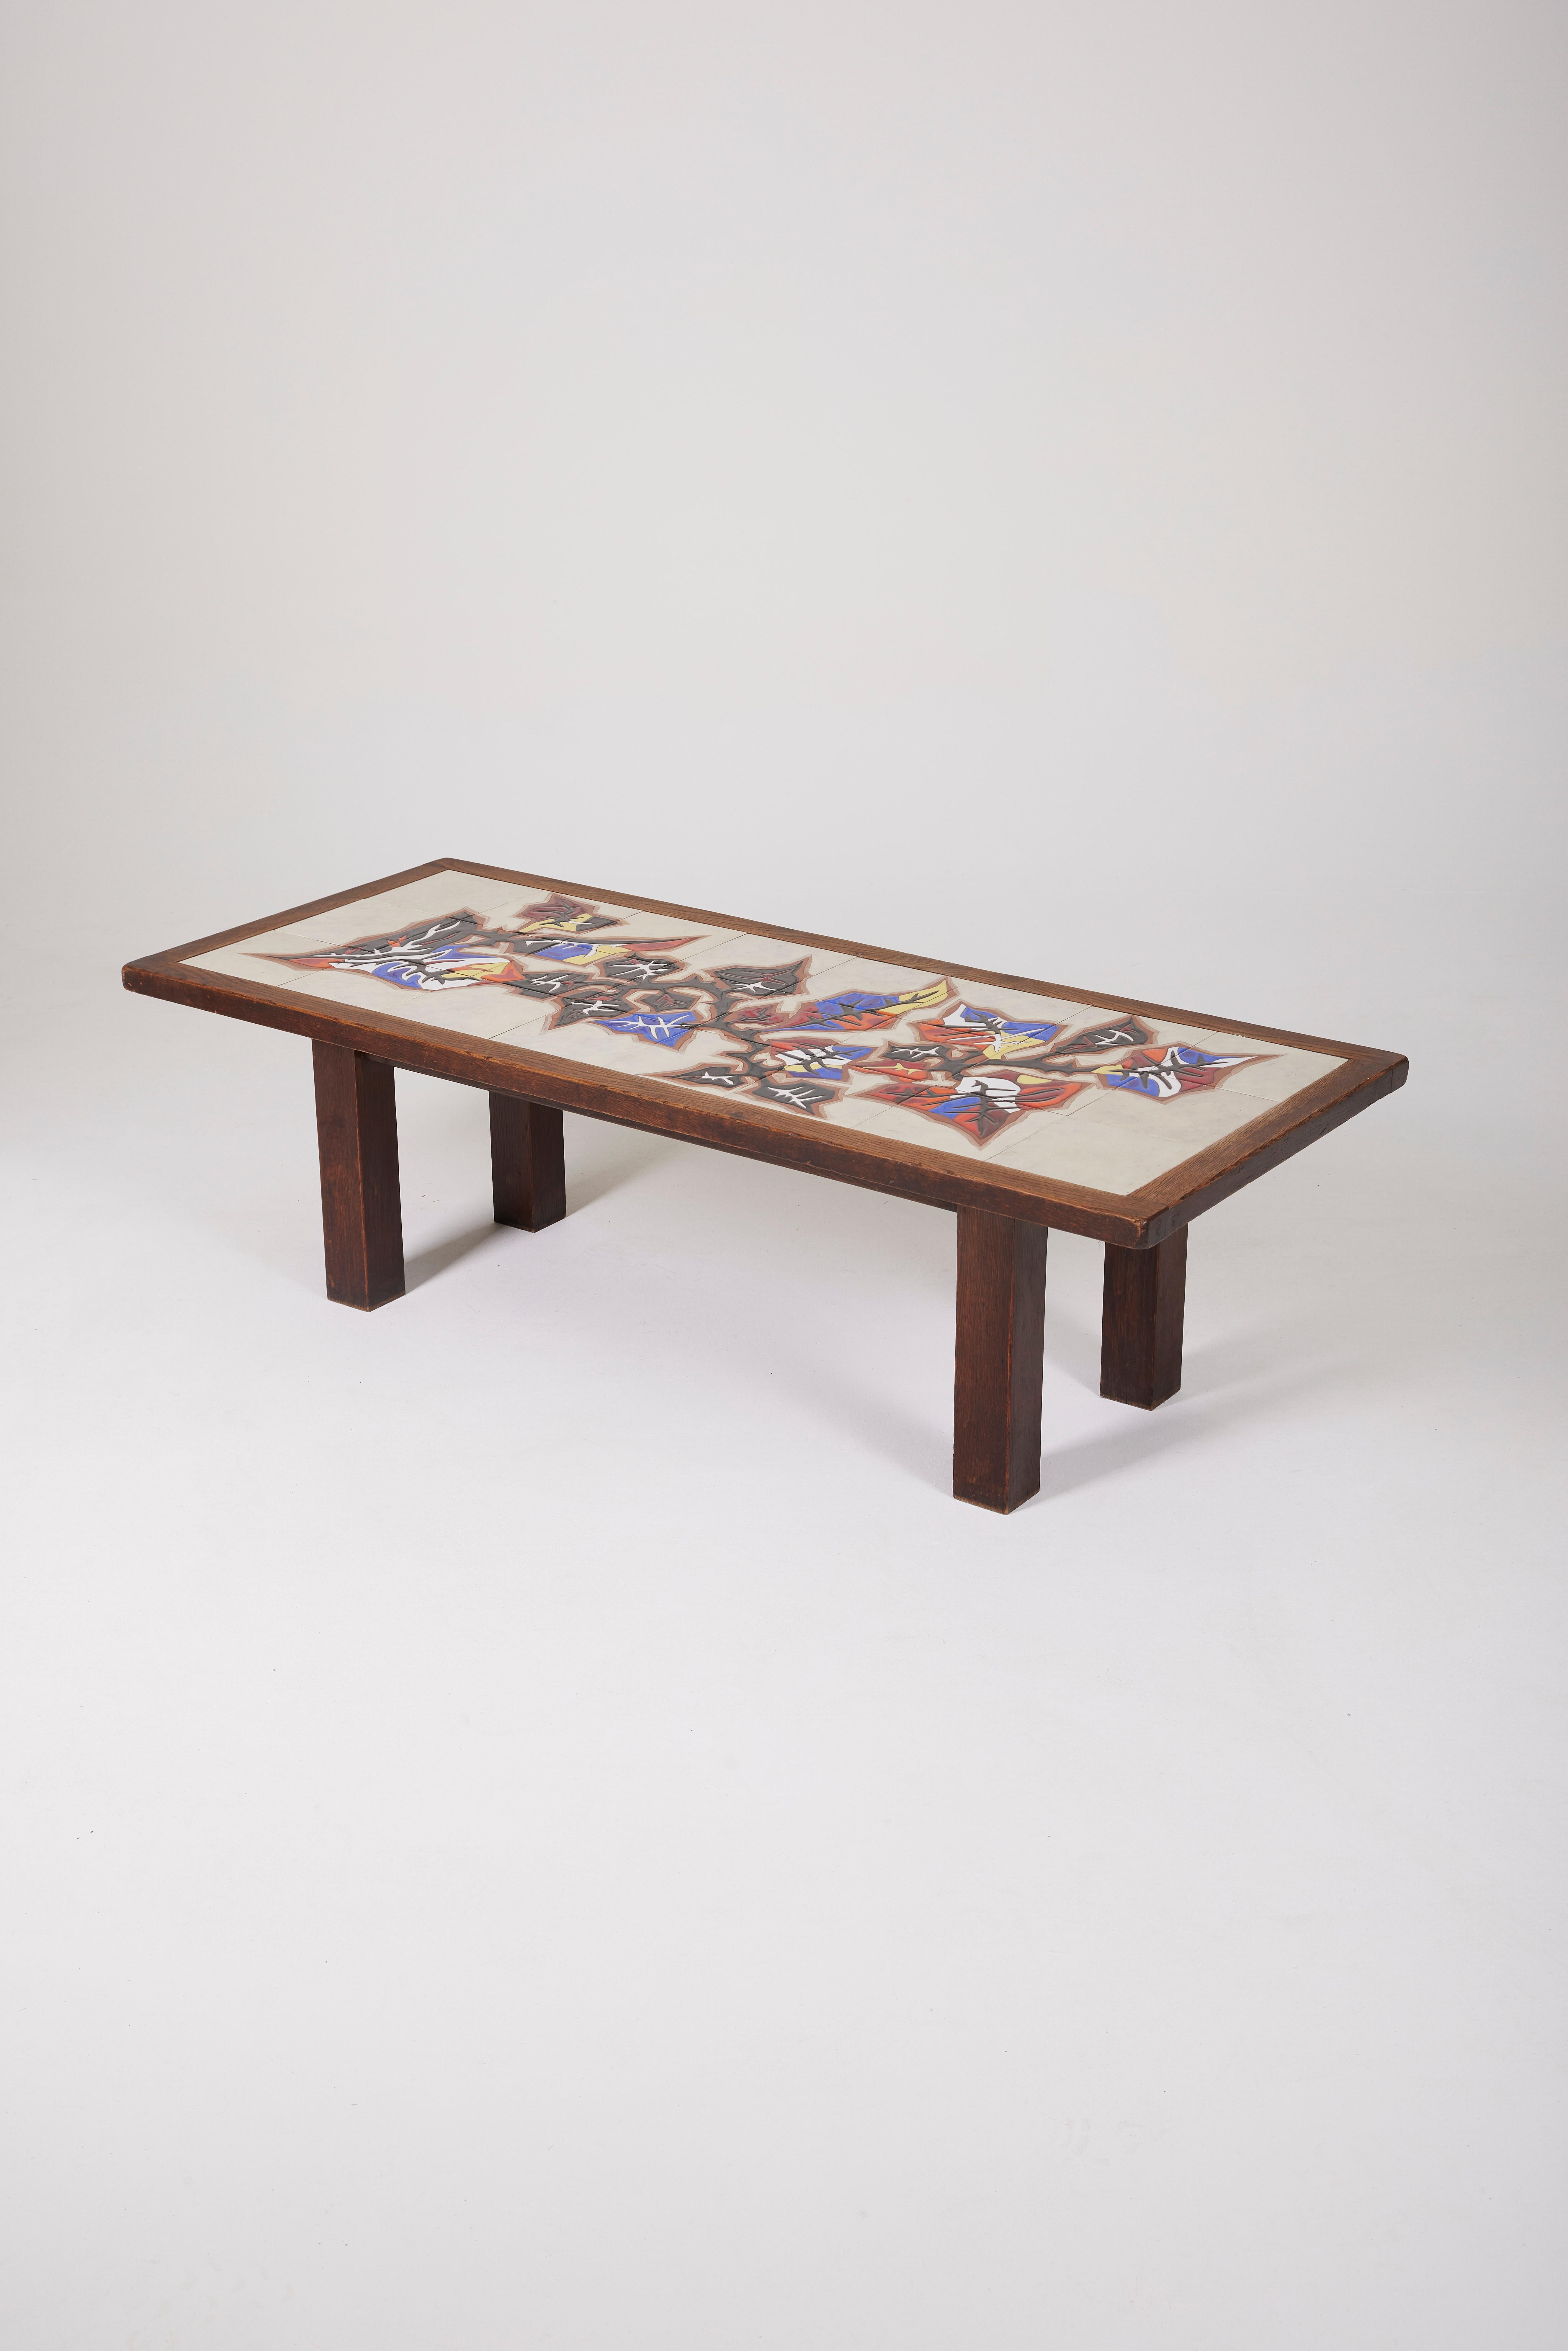 20th Century Ceramic coffee table by Jean Lurcat, 1950s.